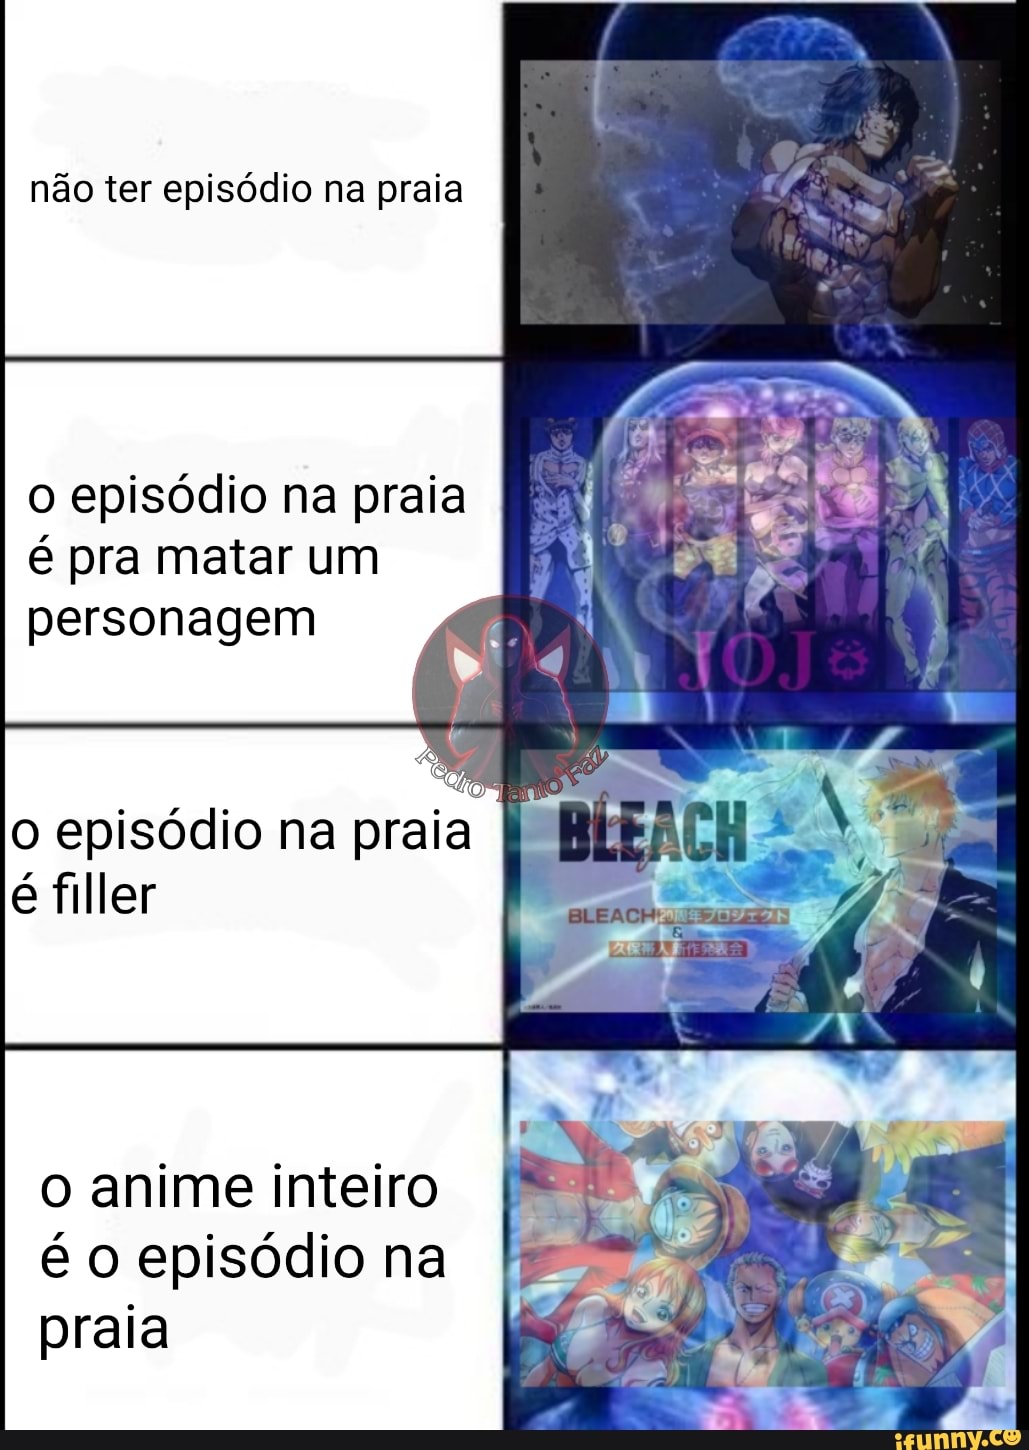 Episodios Fillers em cada anime - iFunny Brazil